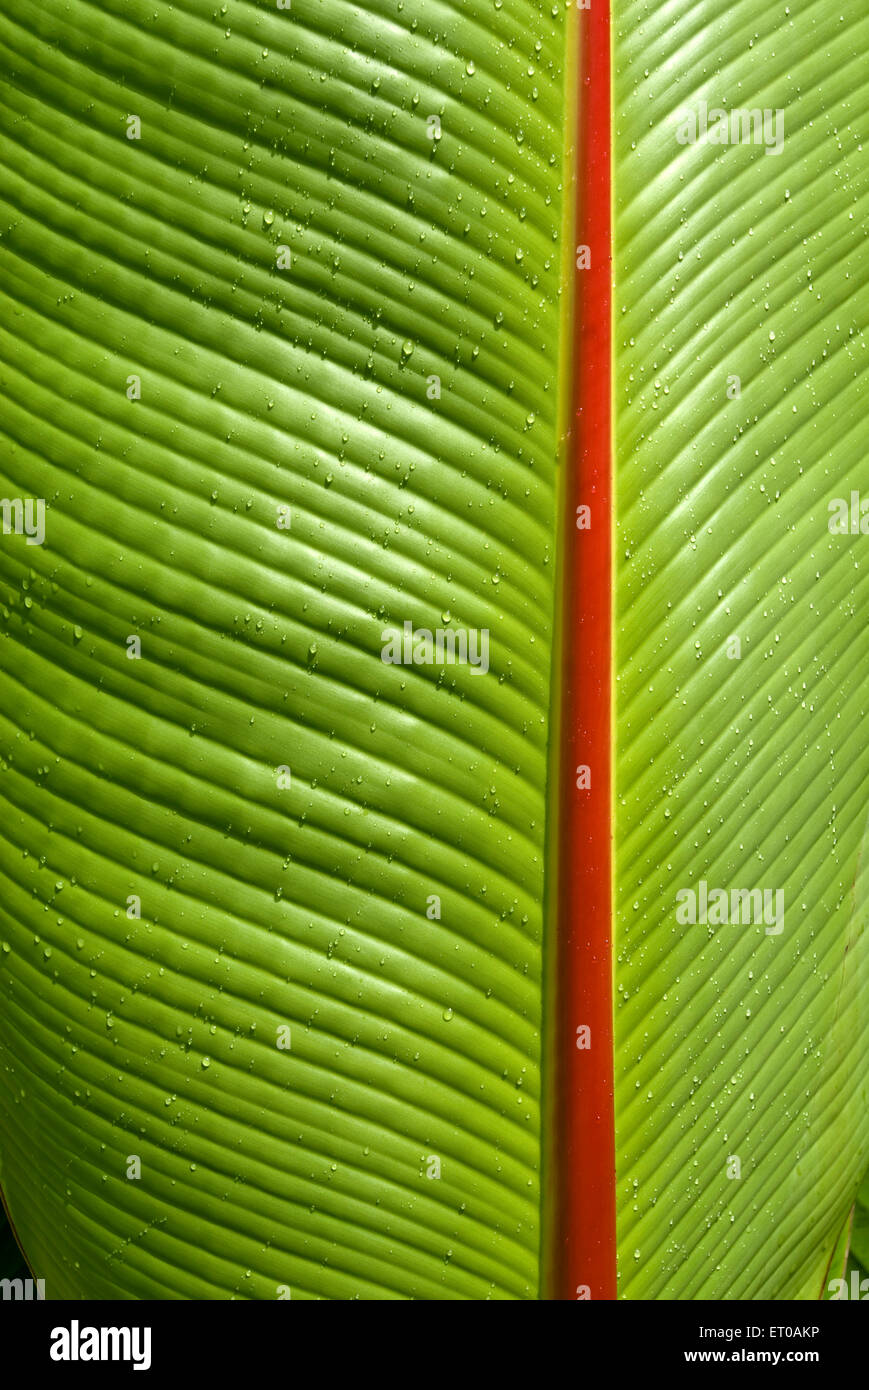 Bananenbaumblatt, Bananenblatt, Bananenpflanzenblatt, grünes Blatt, Kerala, Indien, Asien Stockfoto